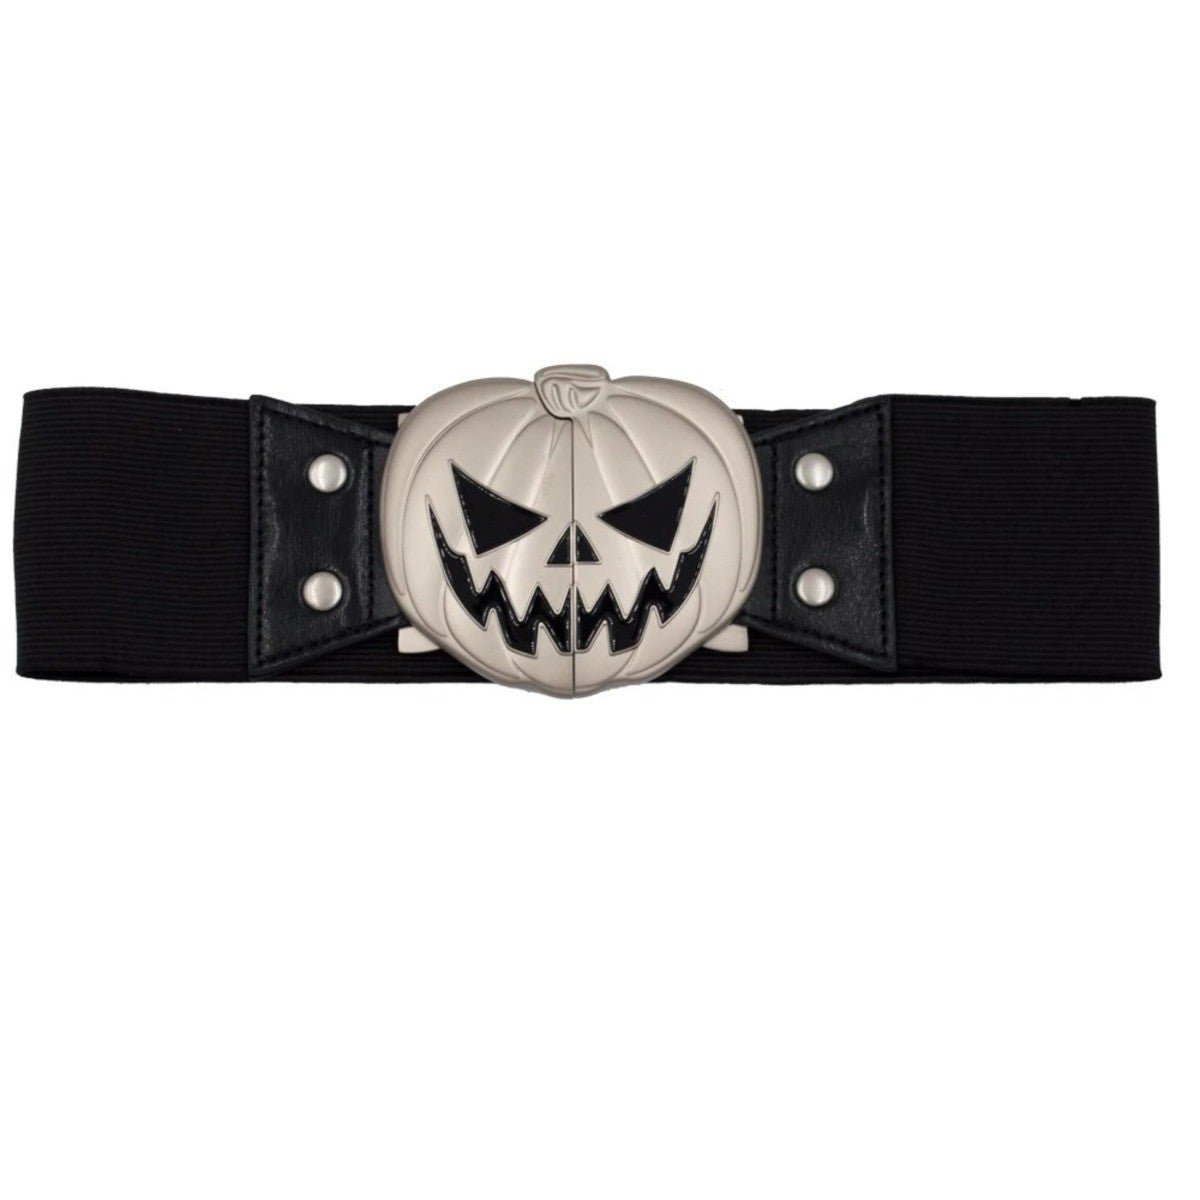 Kreepsville 666 Trick or Treat Pumpkin Elastic Waist Belt, Black